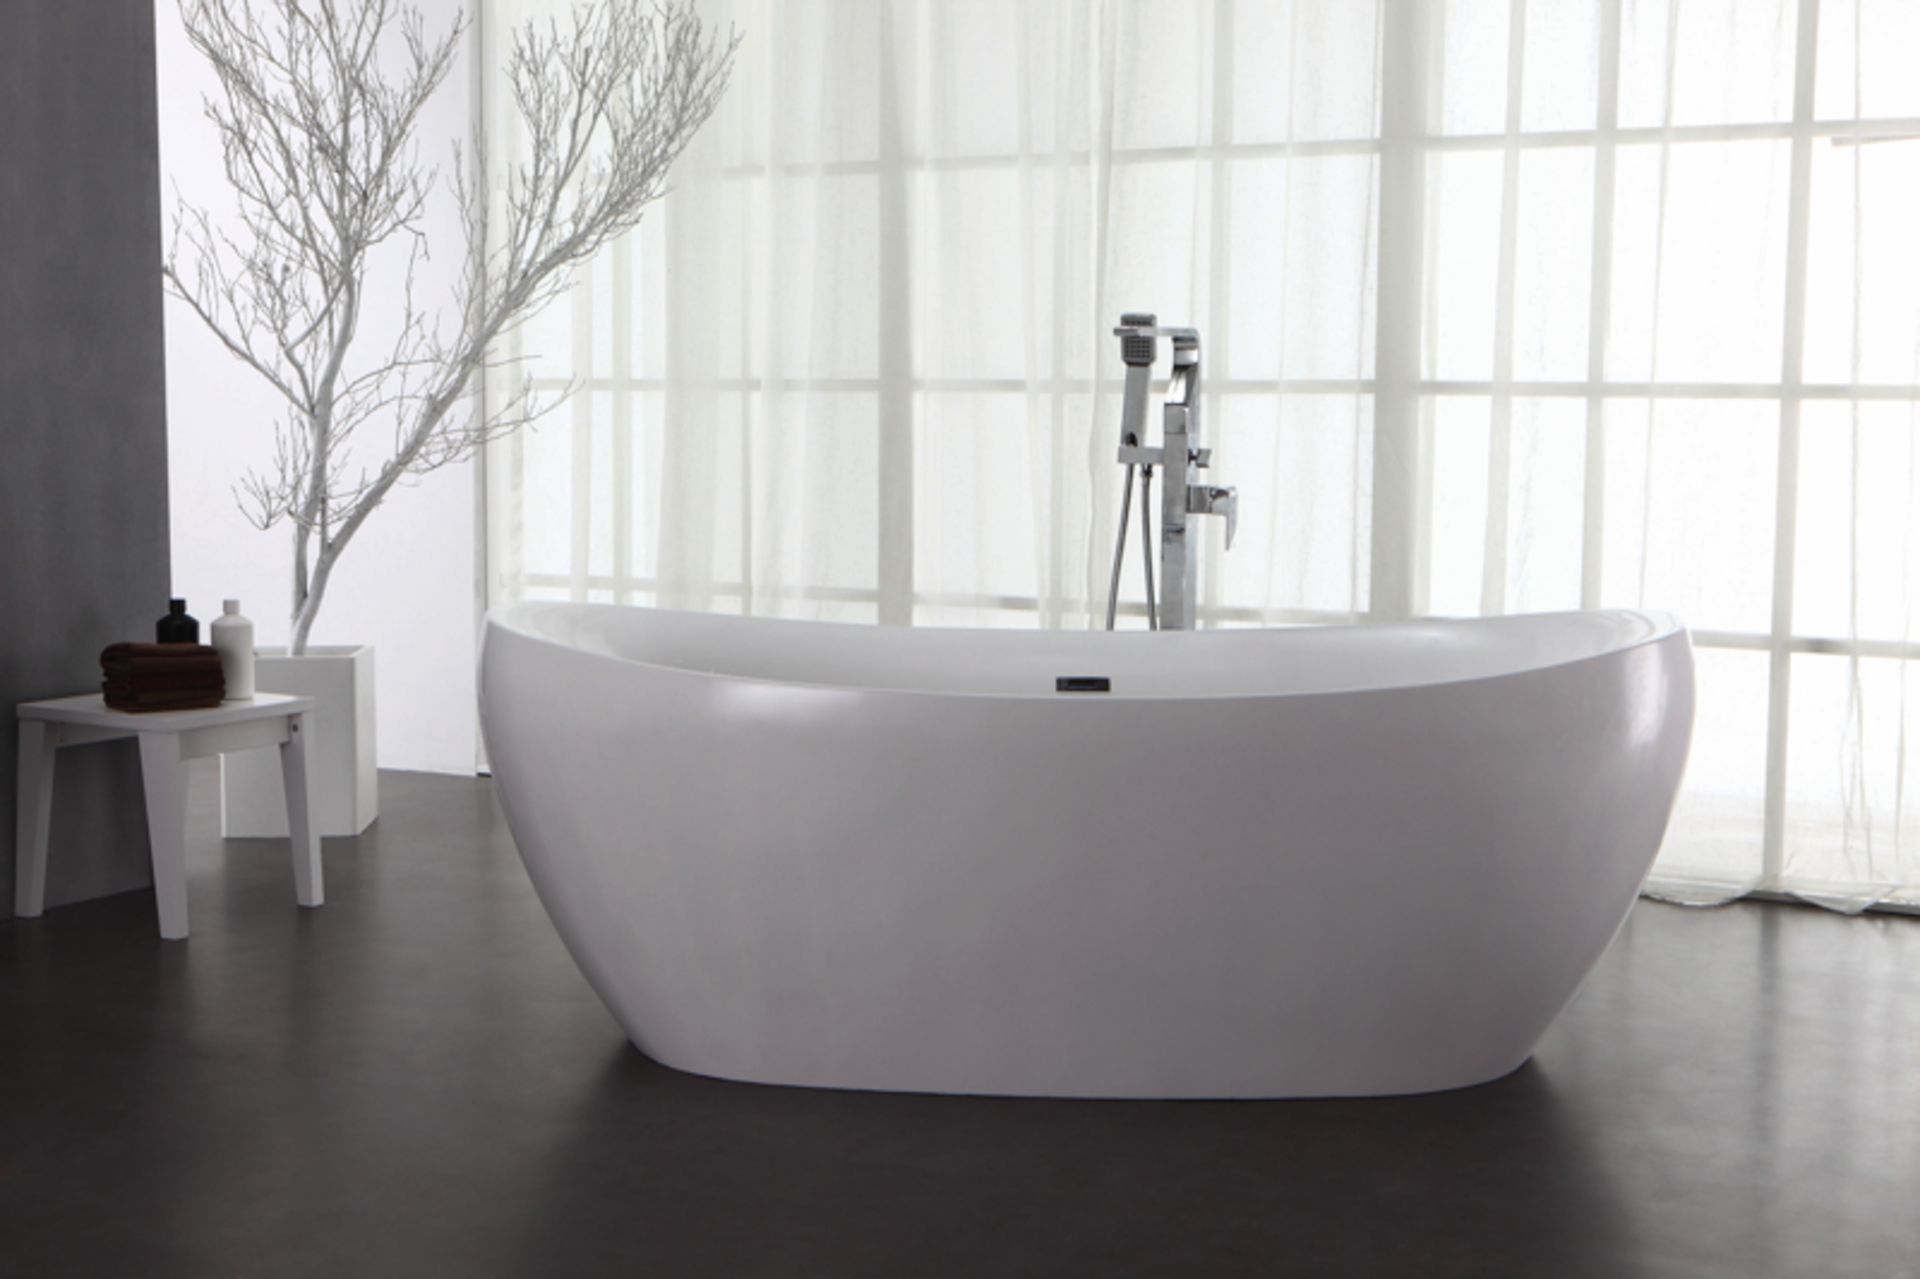 1 x MarbleTECH Serenity Bath - Image 2 of 5